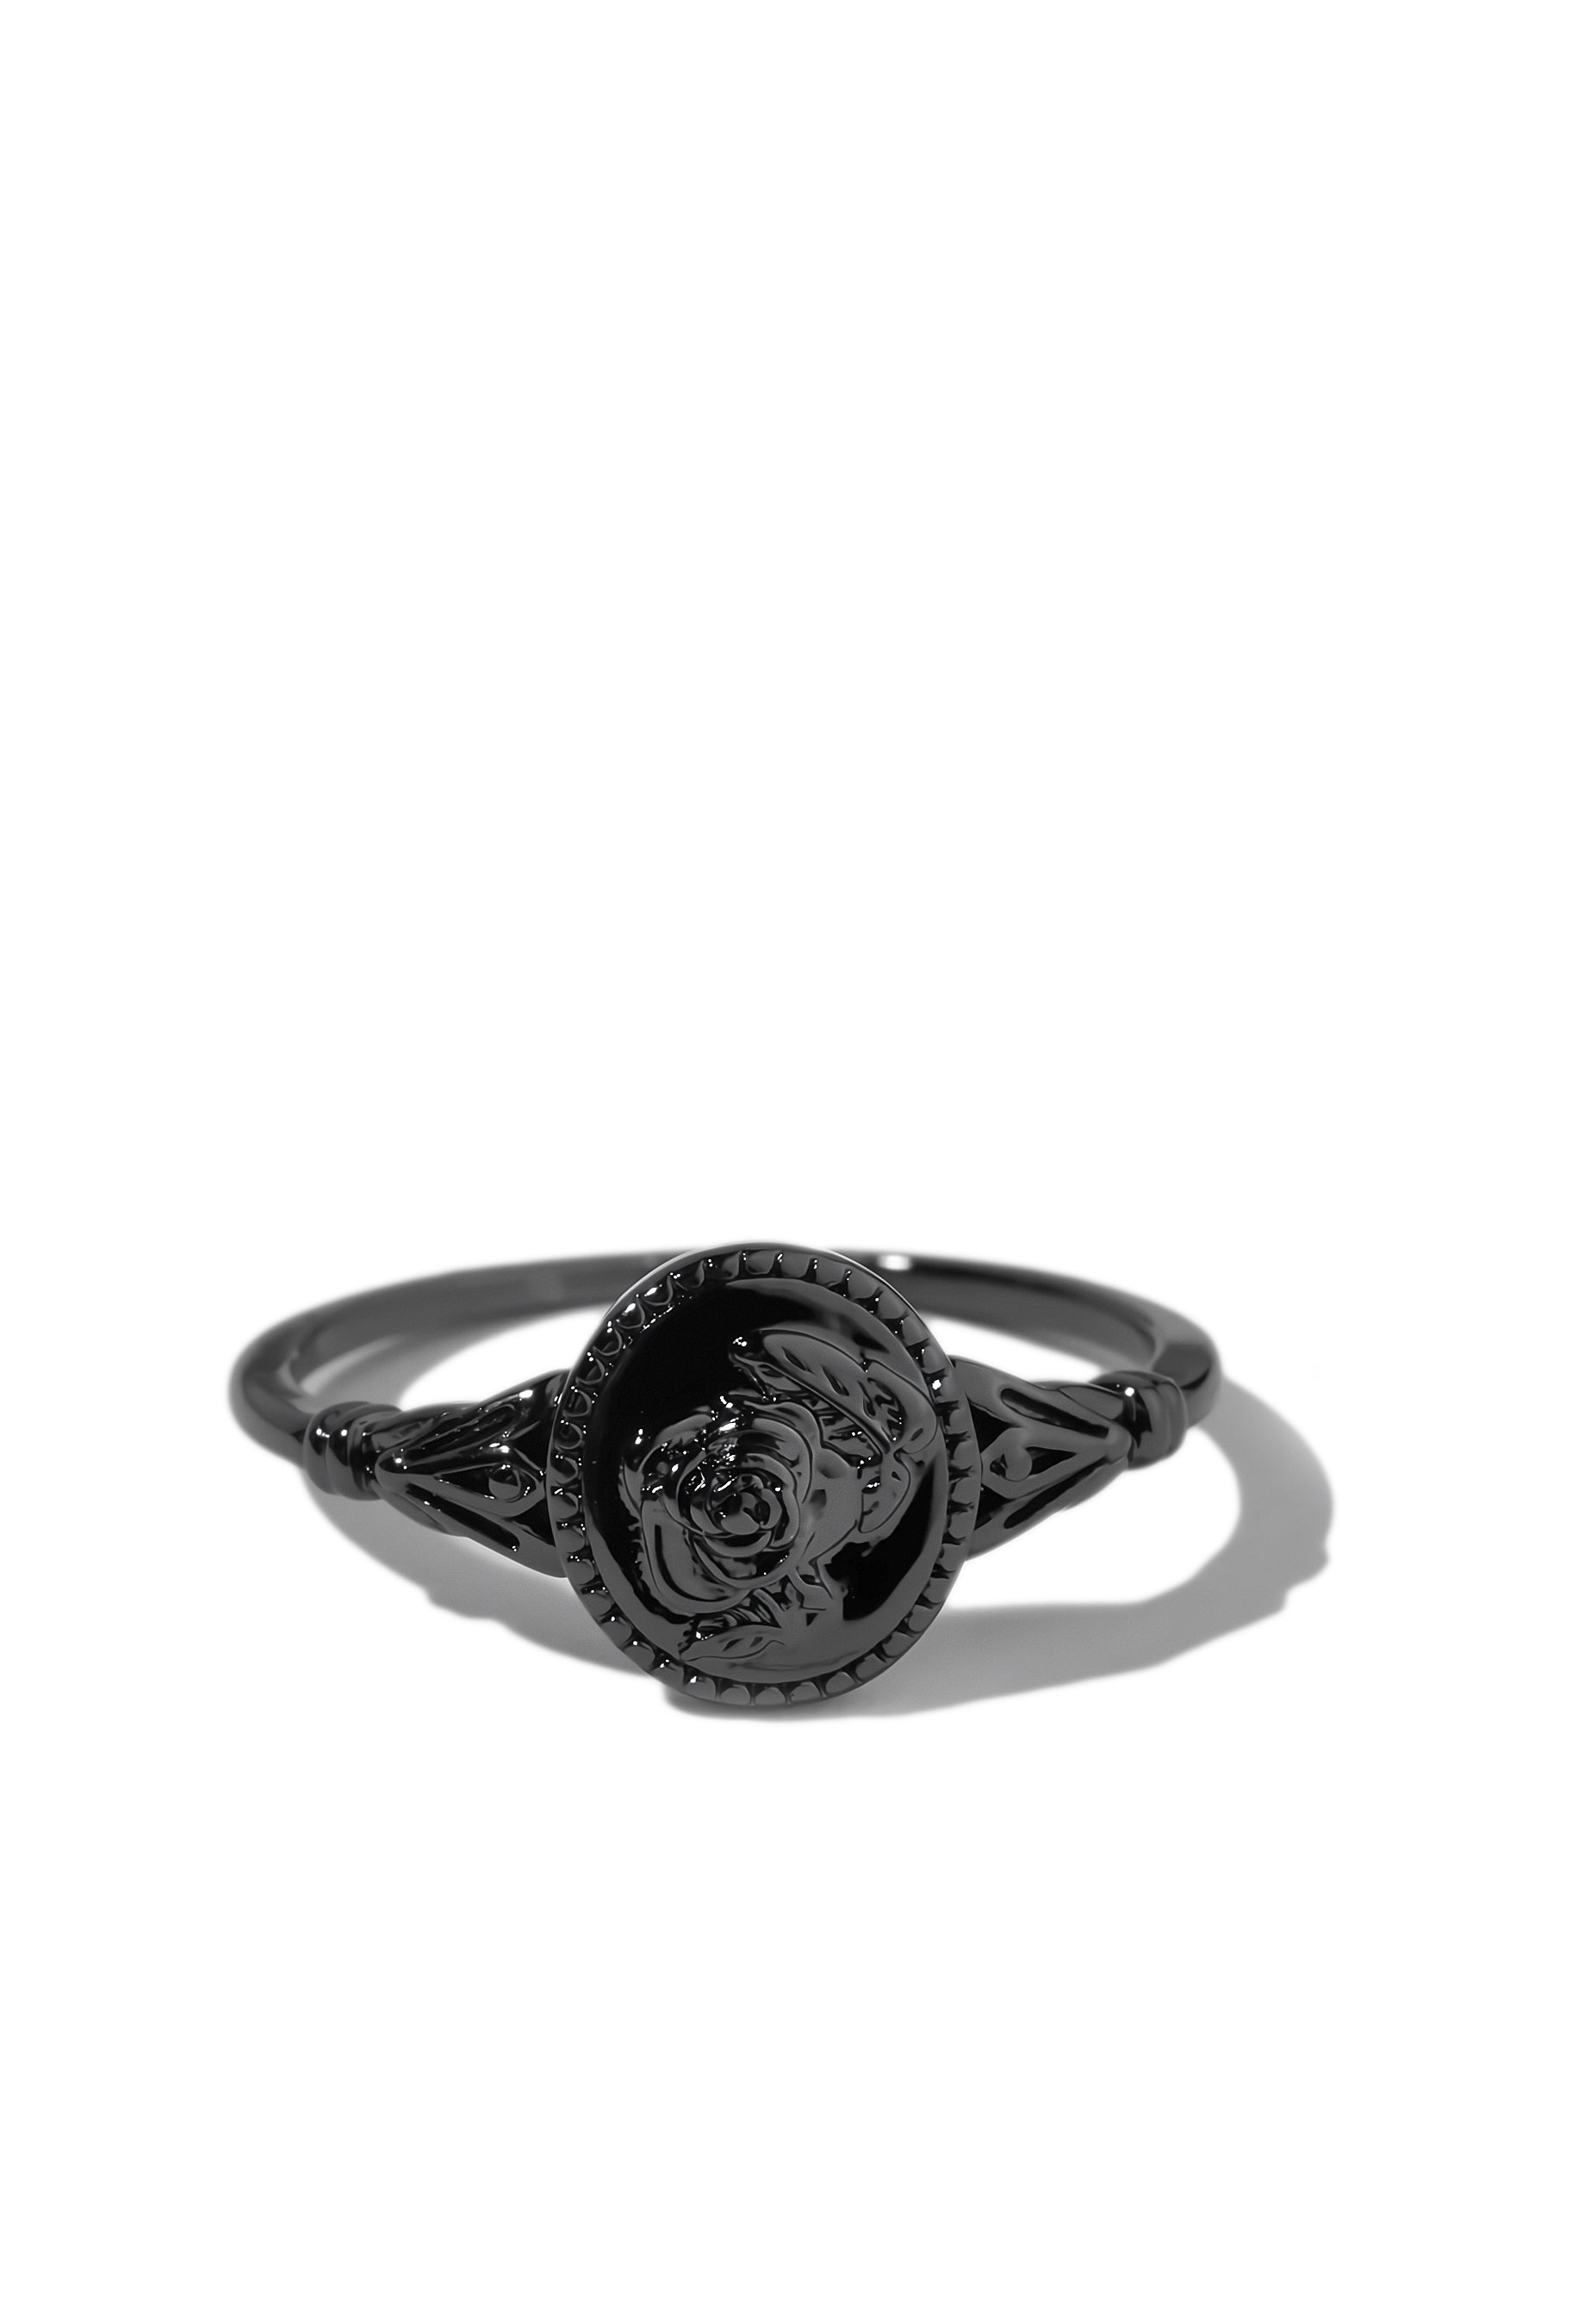 Rose Ring, Black Rose Ring, Black Ring,adjustable Ring, Flower Ring, Black  Gold Ring,petite Ring, Cabochon Ring, Filigree Ring, Friend Gift - Etsy